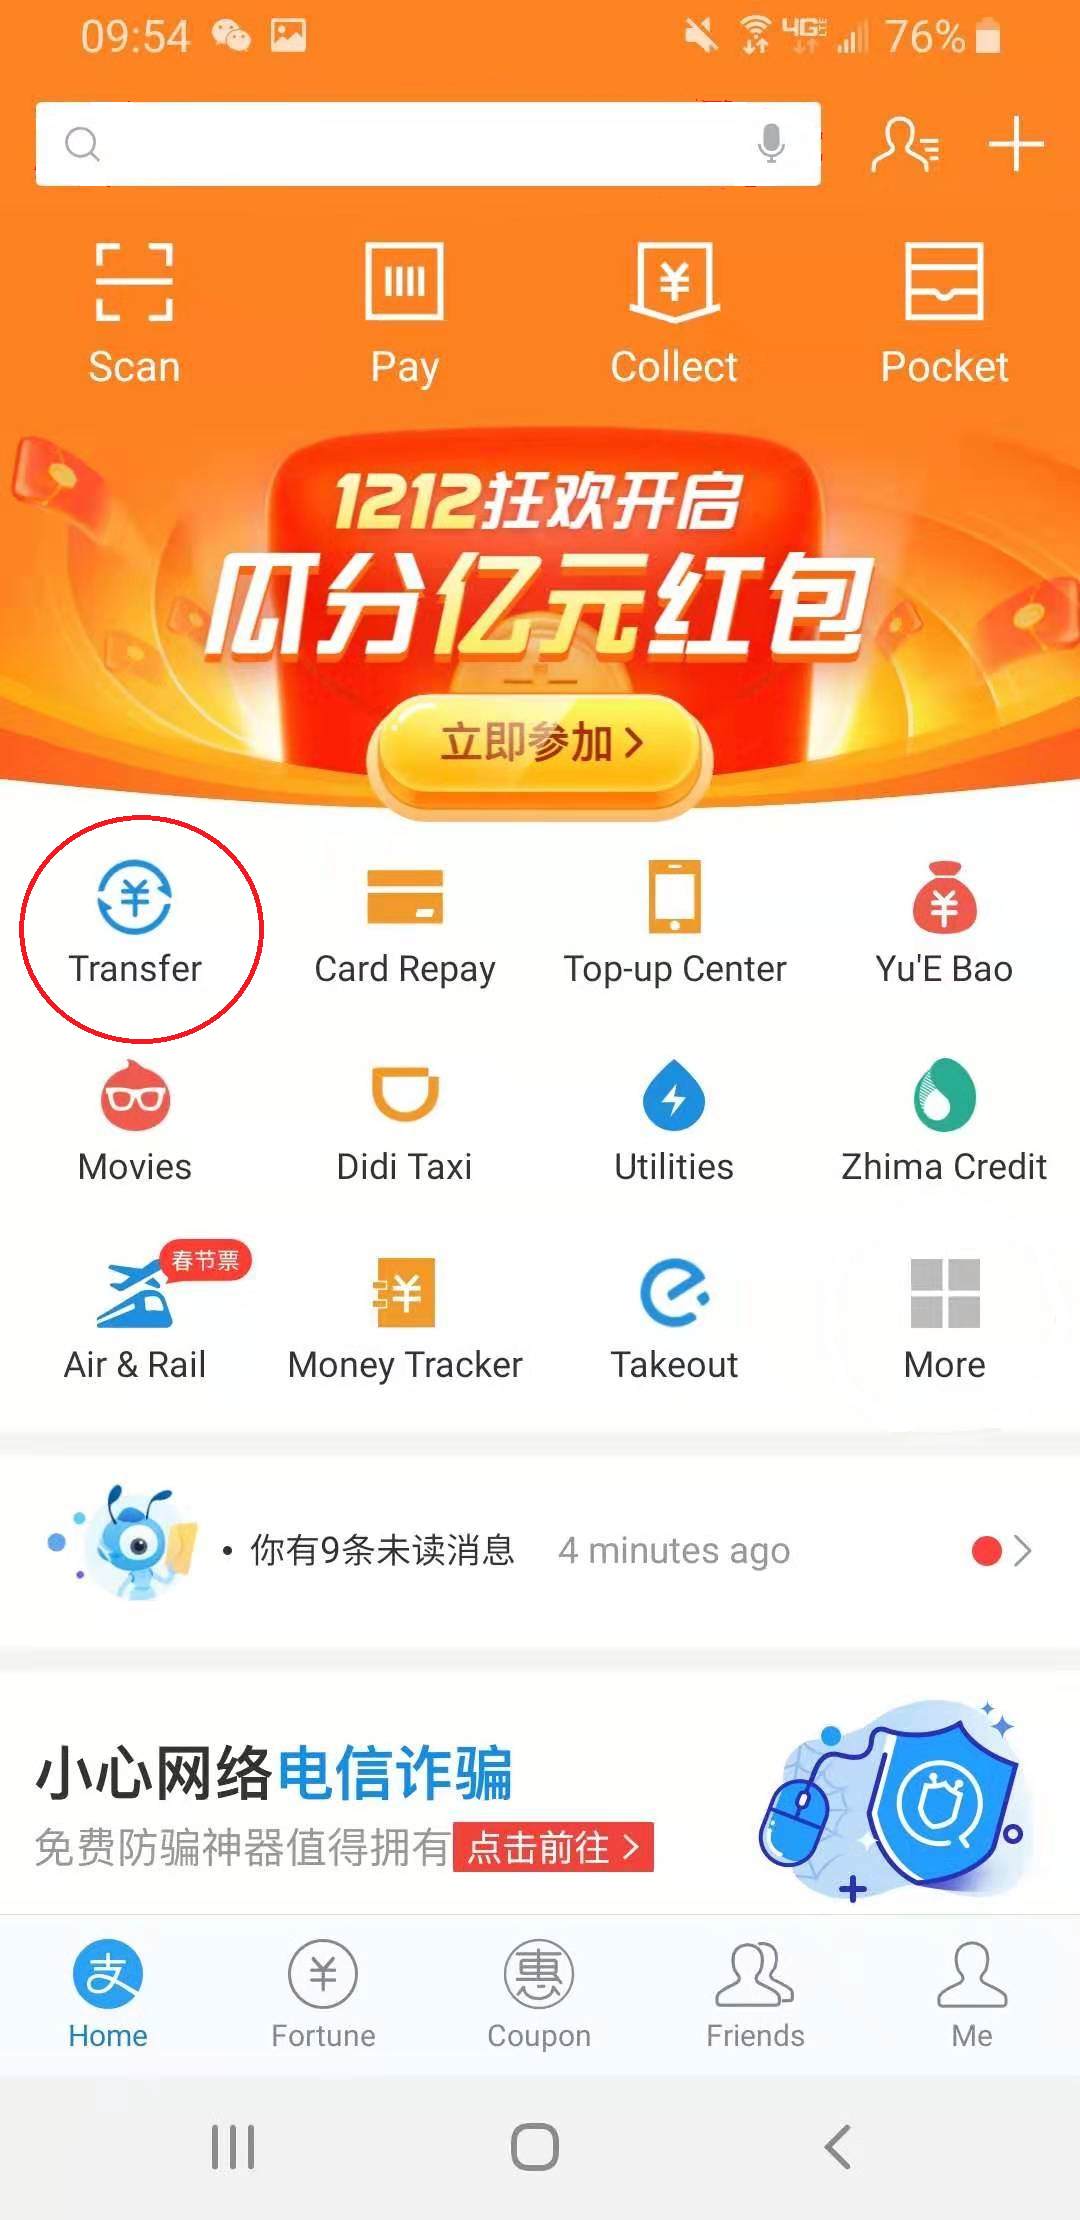 Alipay transfer to pay